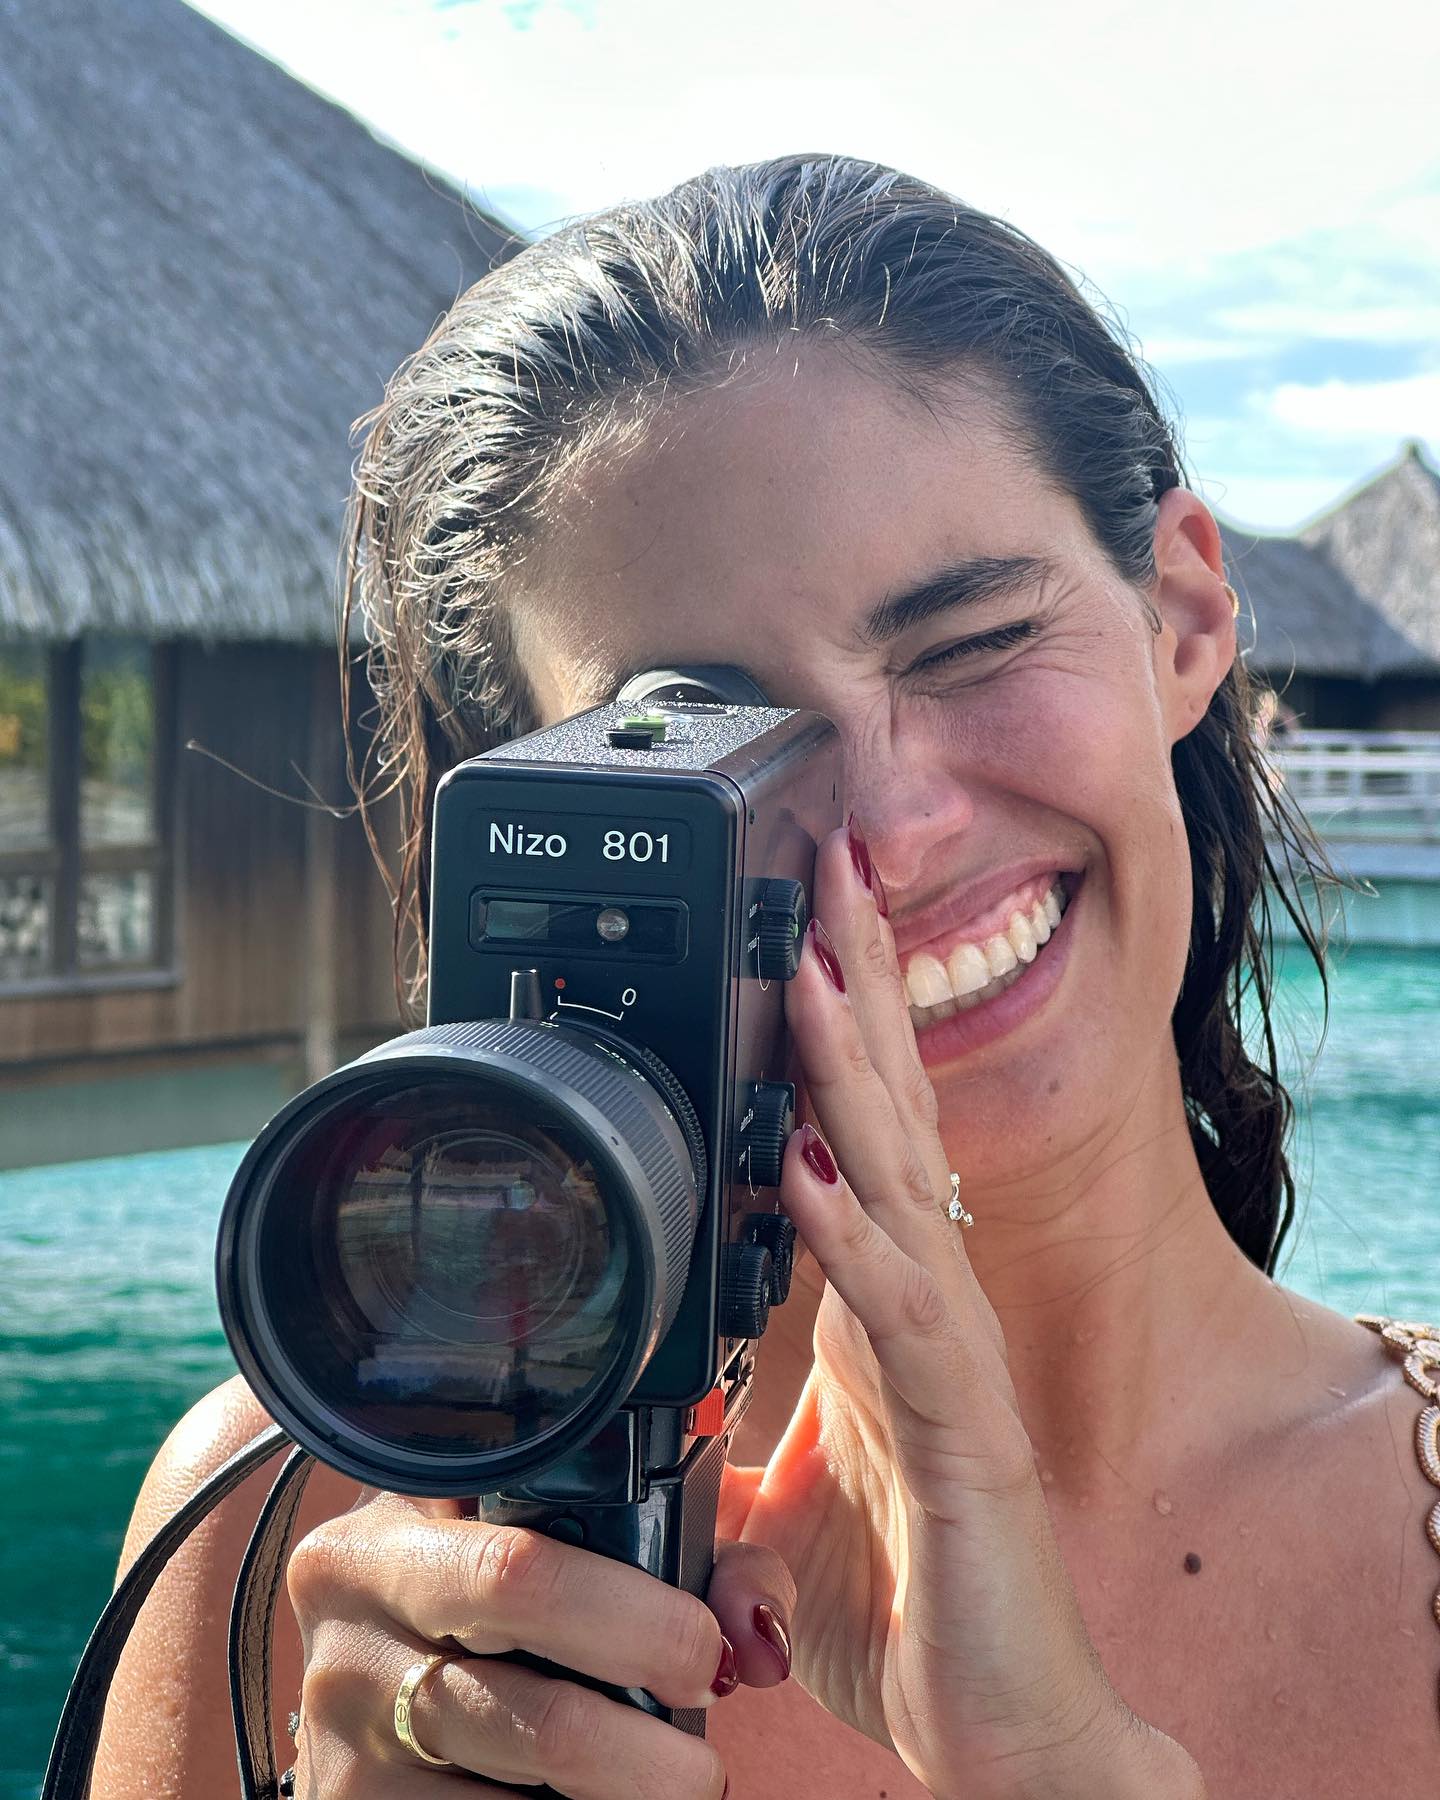 Sara Sampaio’s Bikini in Bora Bora! - Photo 6